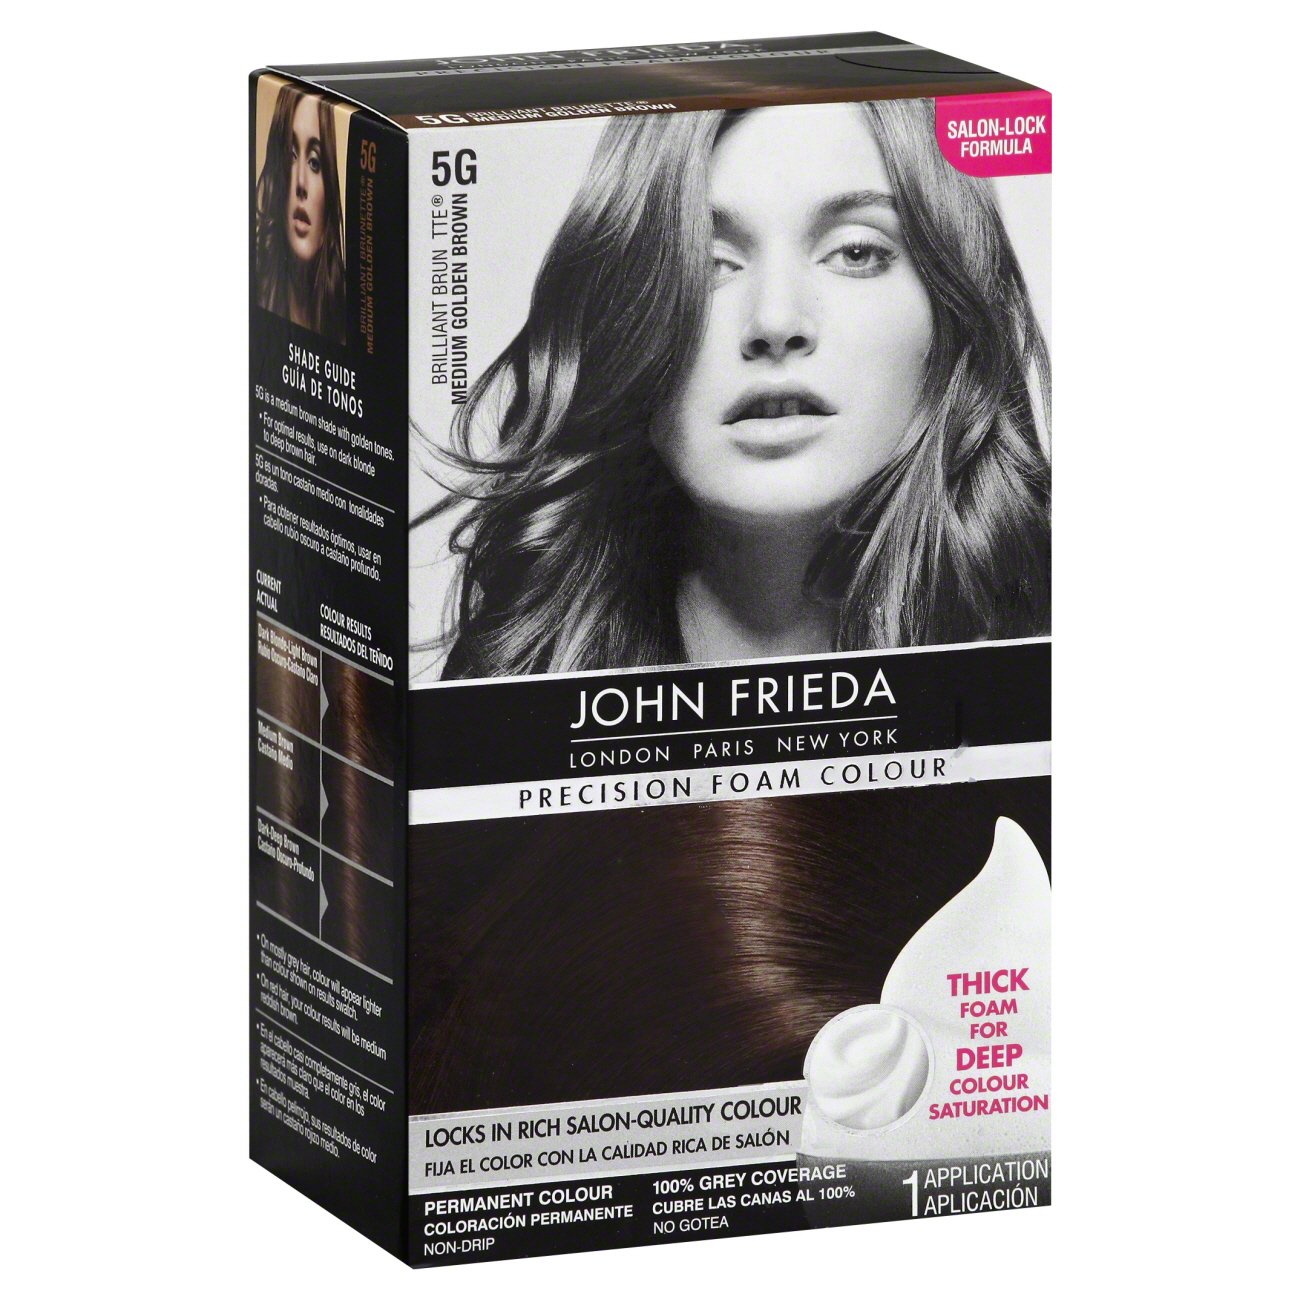 John Frieda Precission Foam Colour Medium Golden Brown Permanent Colour 5G  - Shop Hair Care at H-E-B